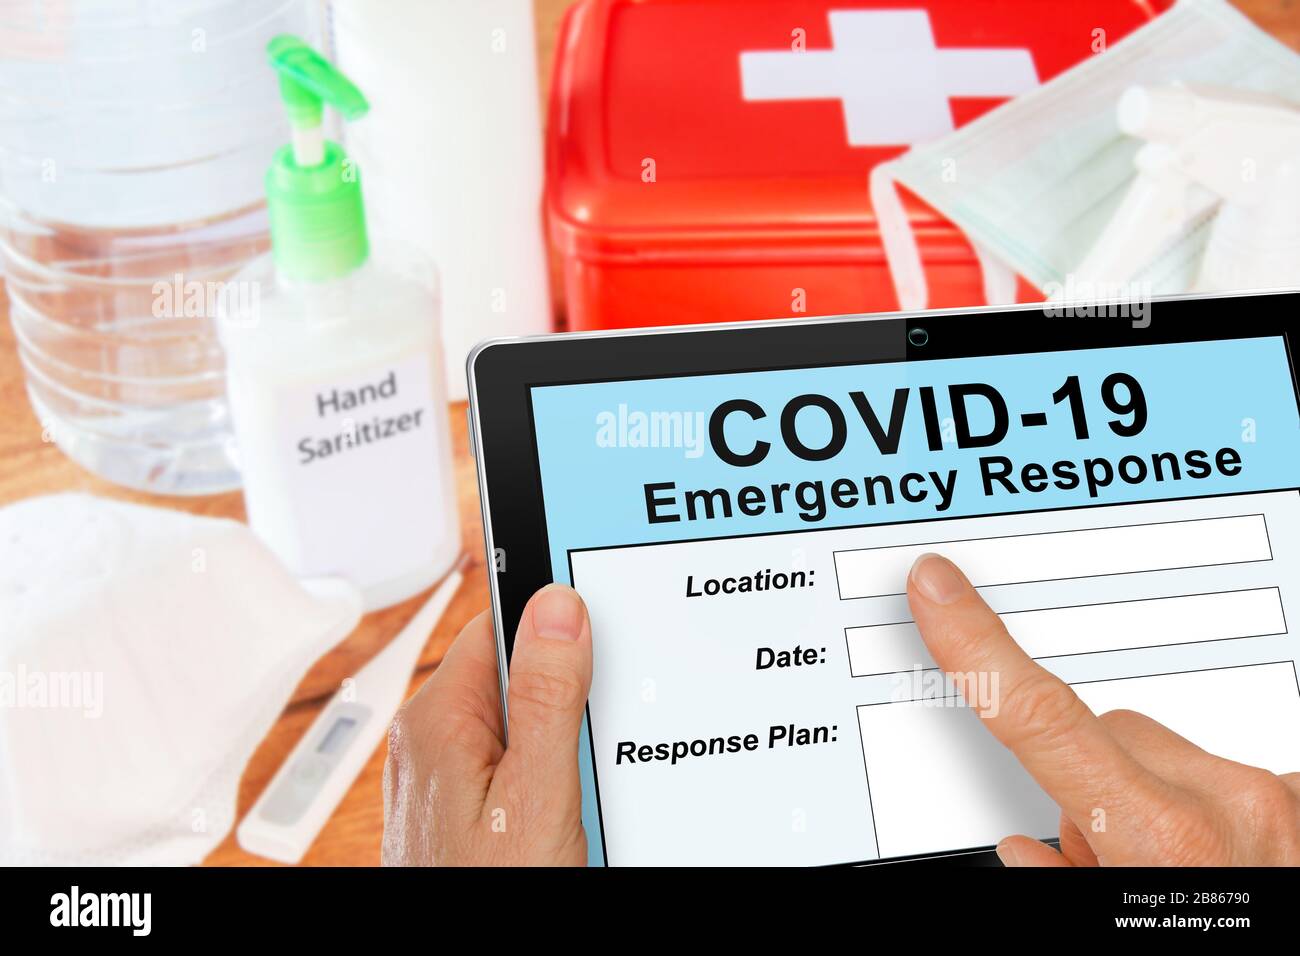 Emergency Response kit for Covid19 Coronavirus with mask and sanitizer self isolation concept Stock Photo